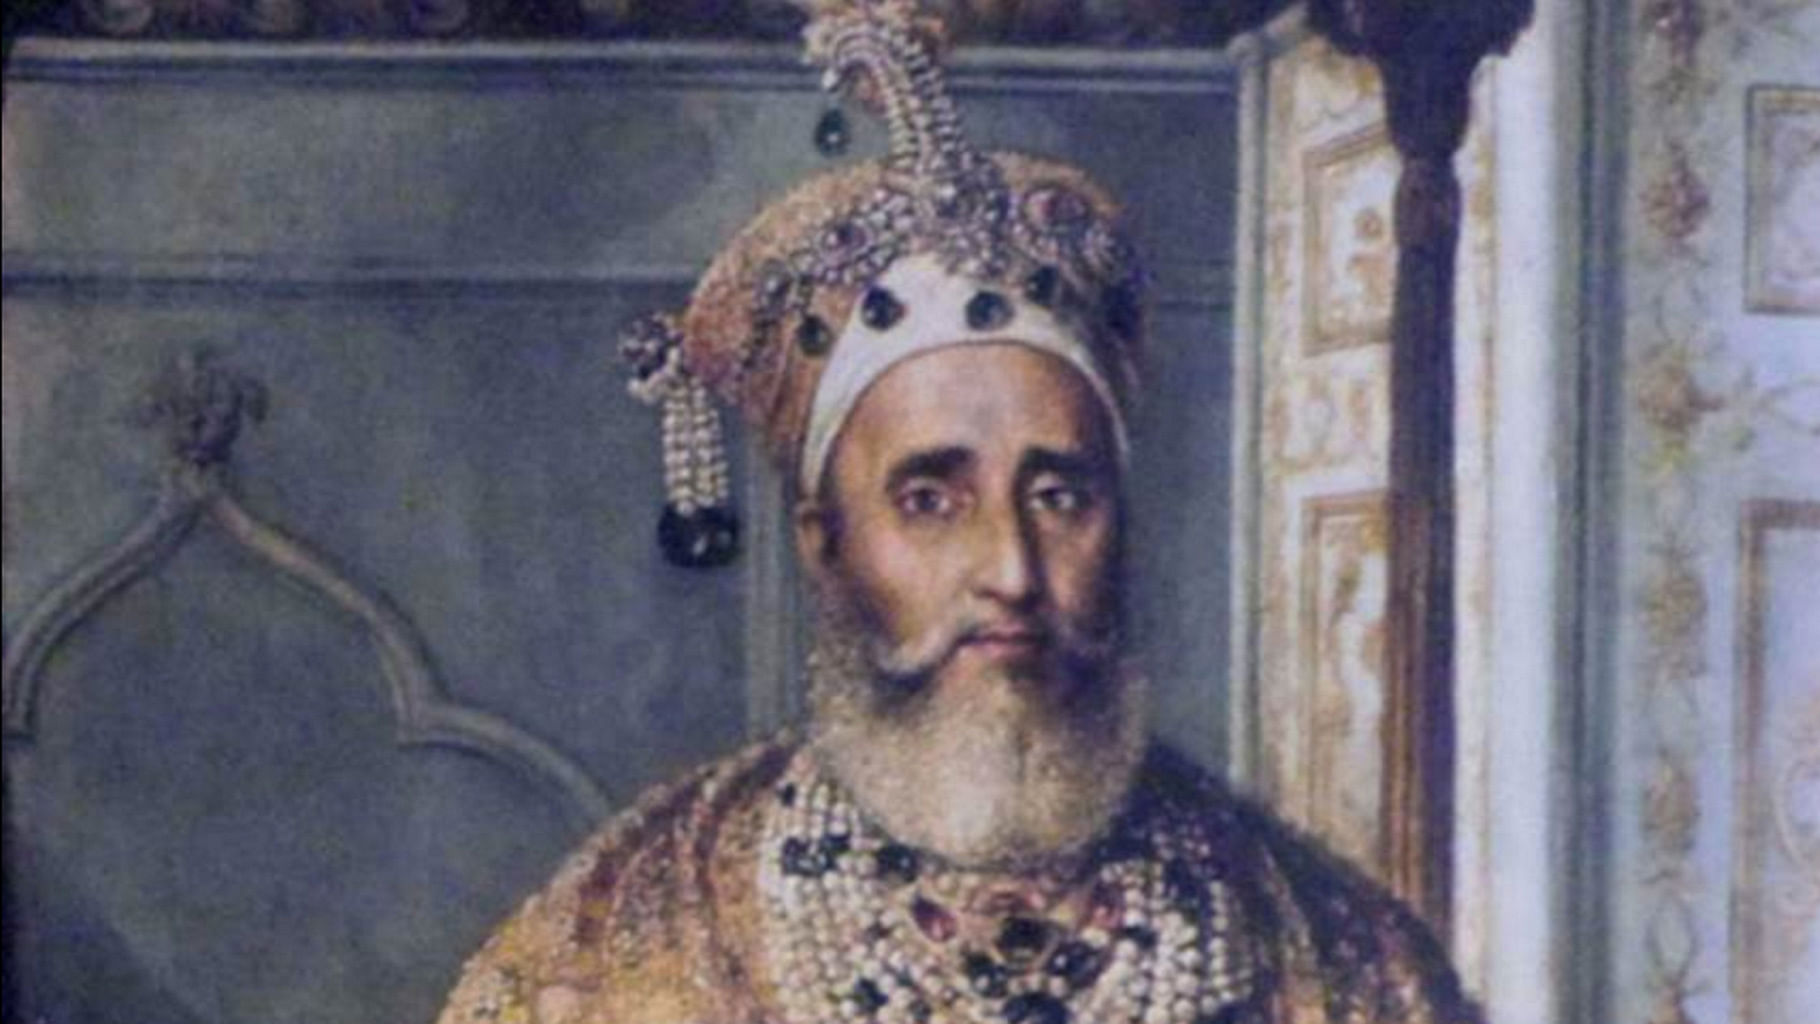 Bahadur Shah Zafar, Emperor and poet. (Courtesy: Twitter/ <a href="https://twitter.com/search?f=images&amp;vertical=default&amp;q=Bahadur%20Shah%20Zafar&amp;src=typd">@MaHZeB_sMs</a>)